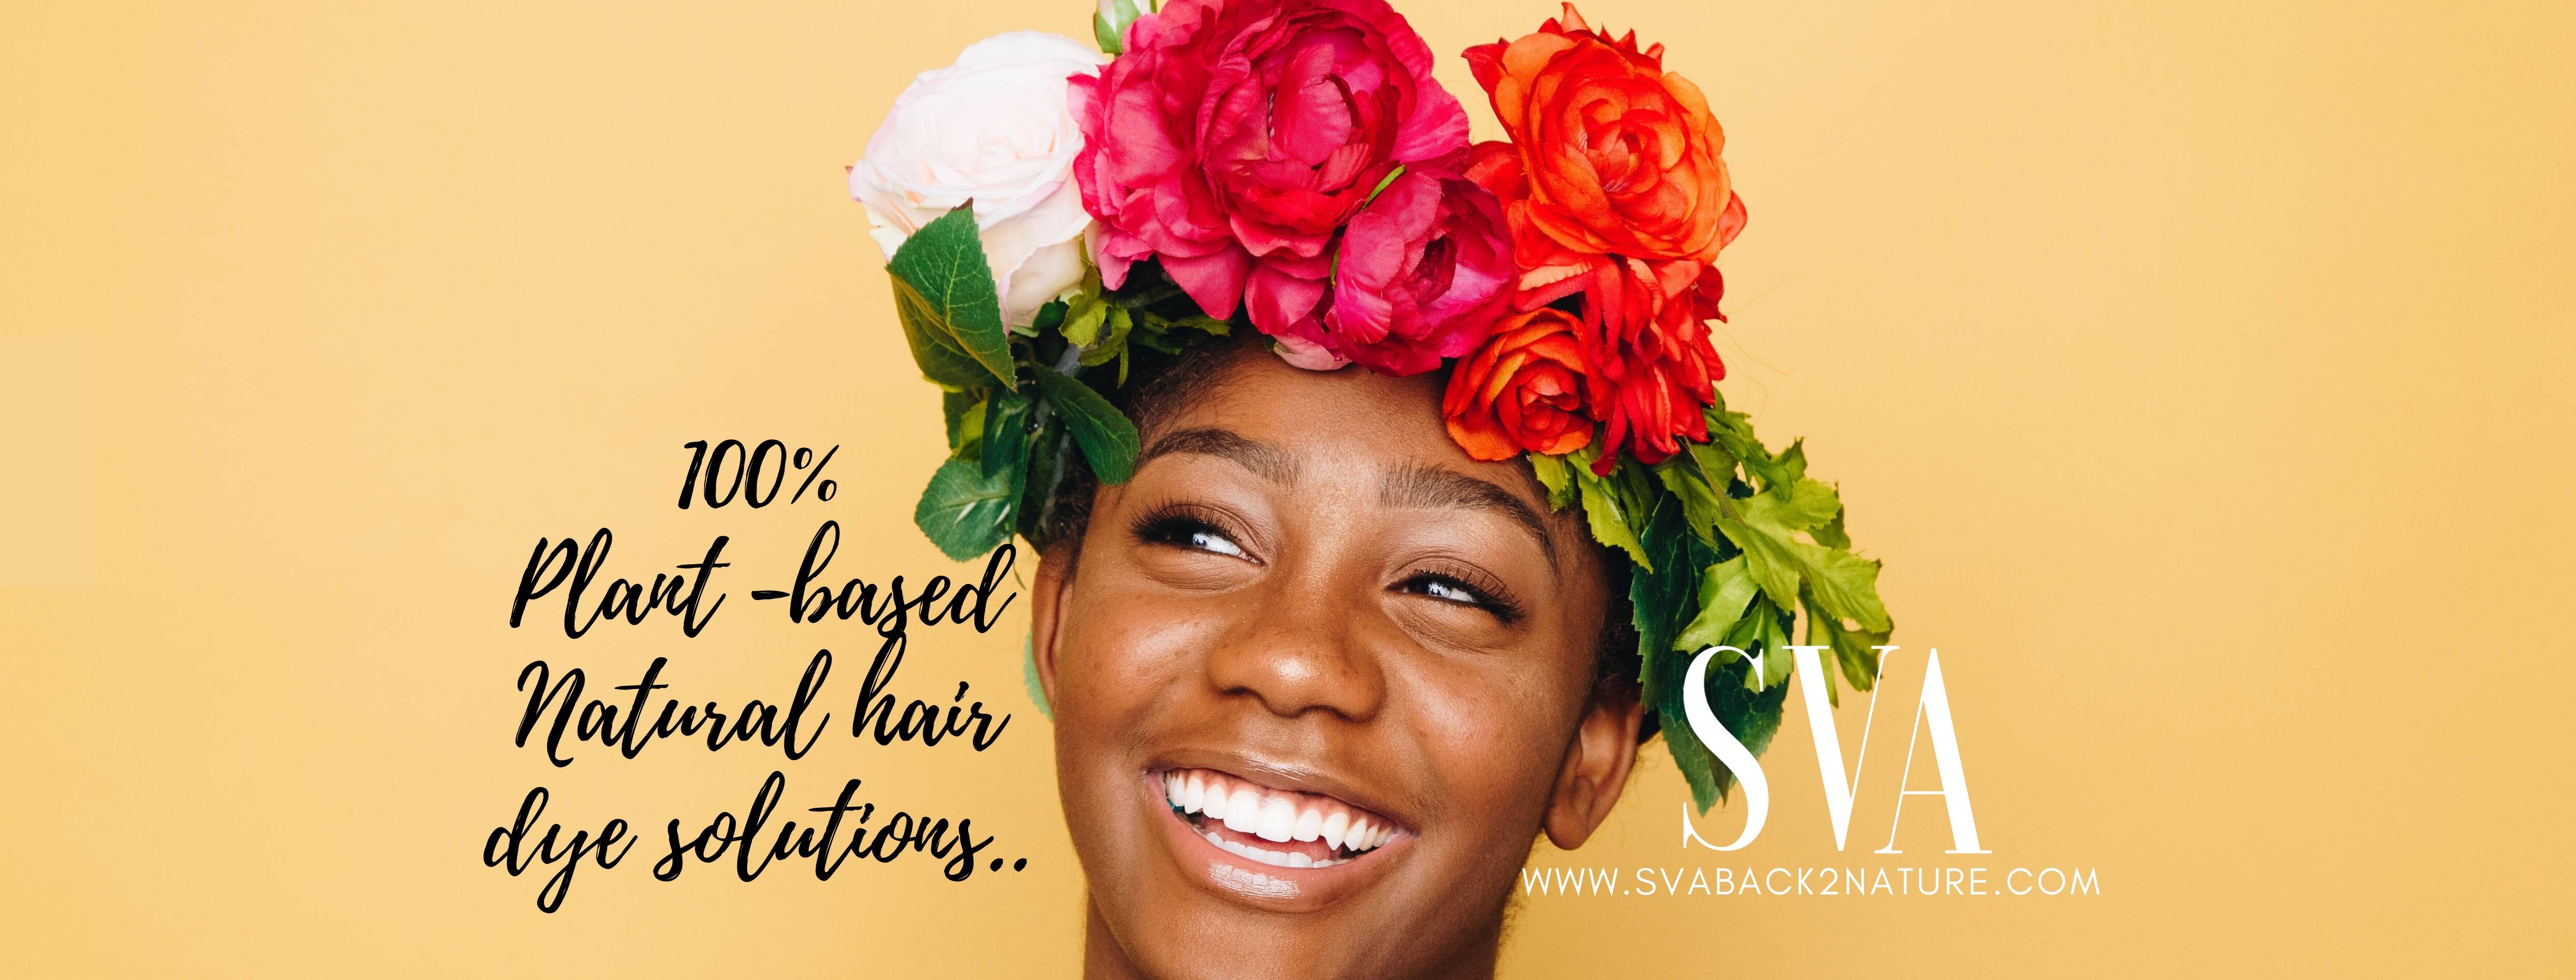 SVA Plant-based hair dyes